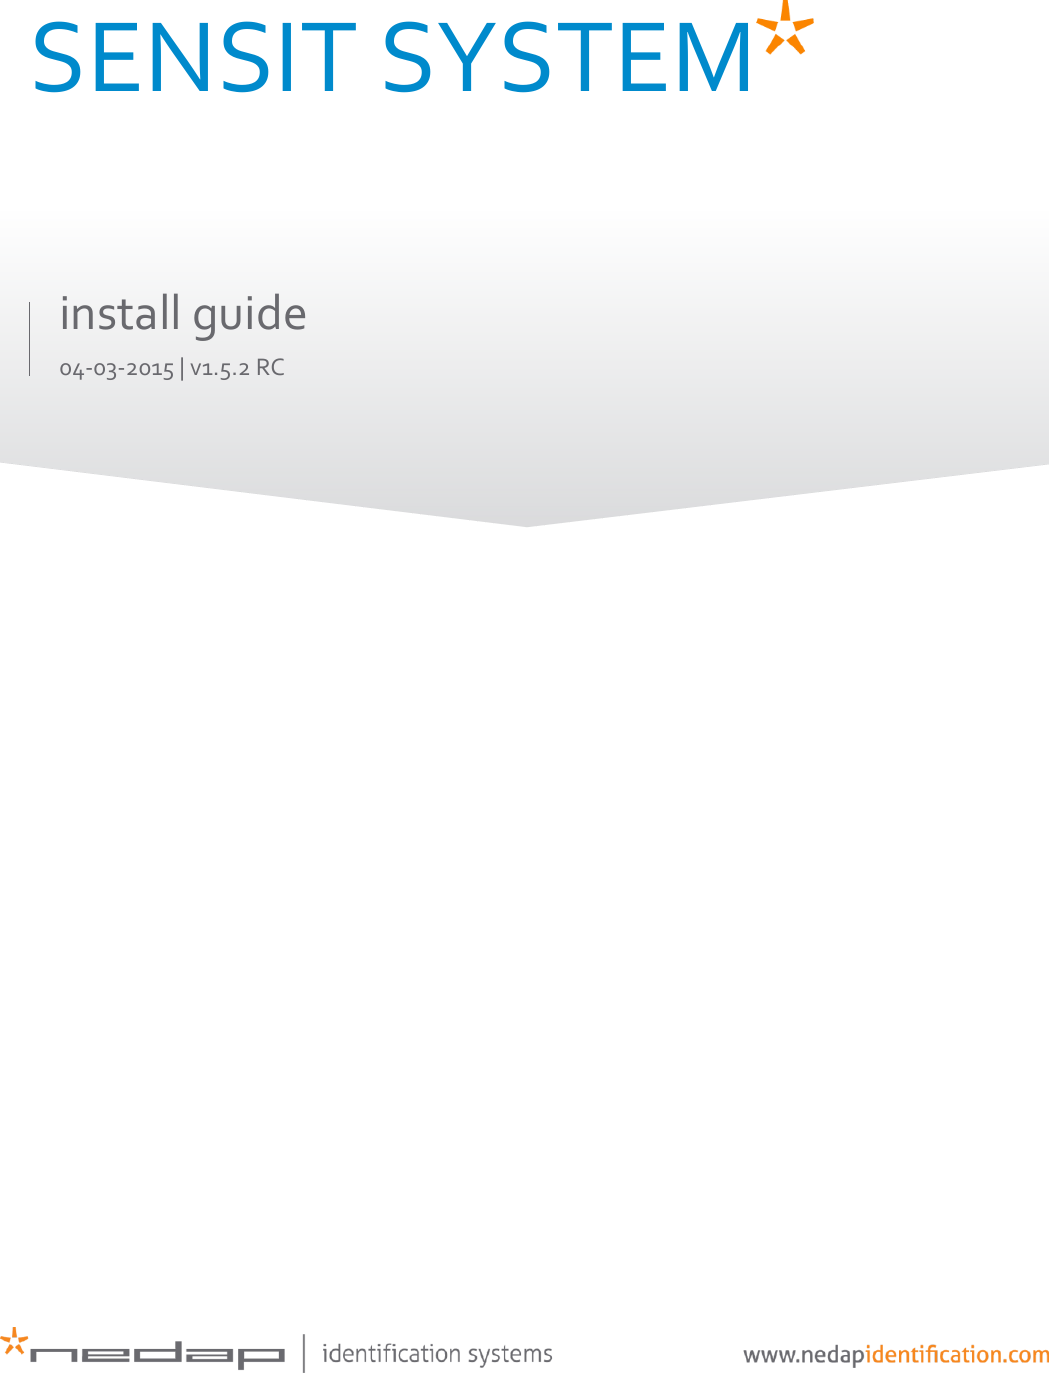       SENSIT SYSTEM    install guide  04-03-2015 | v1.5.2 RC   